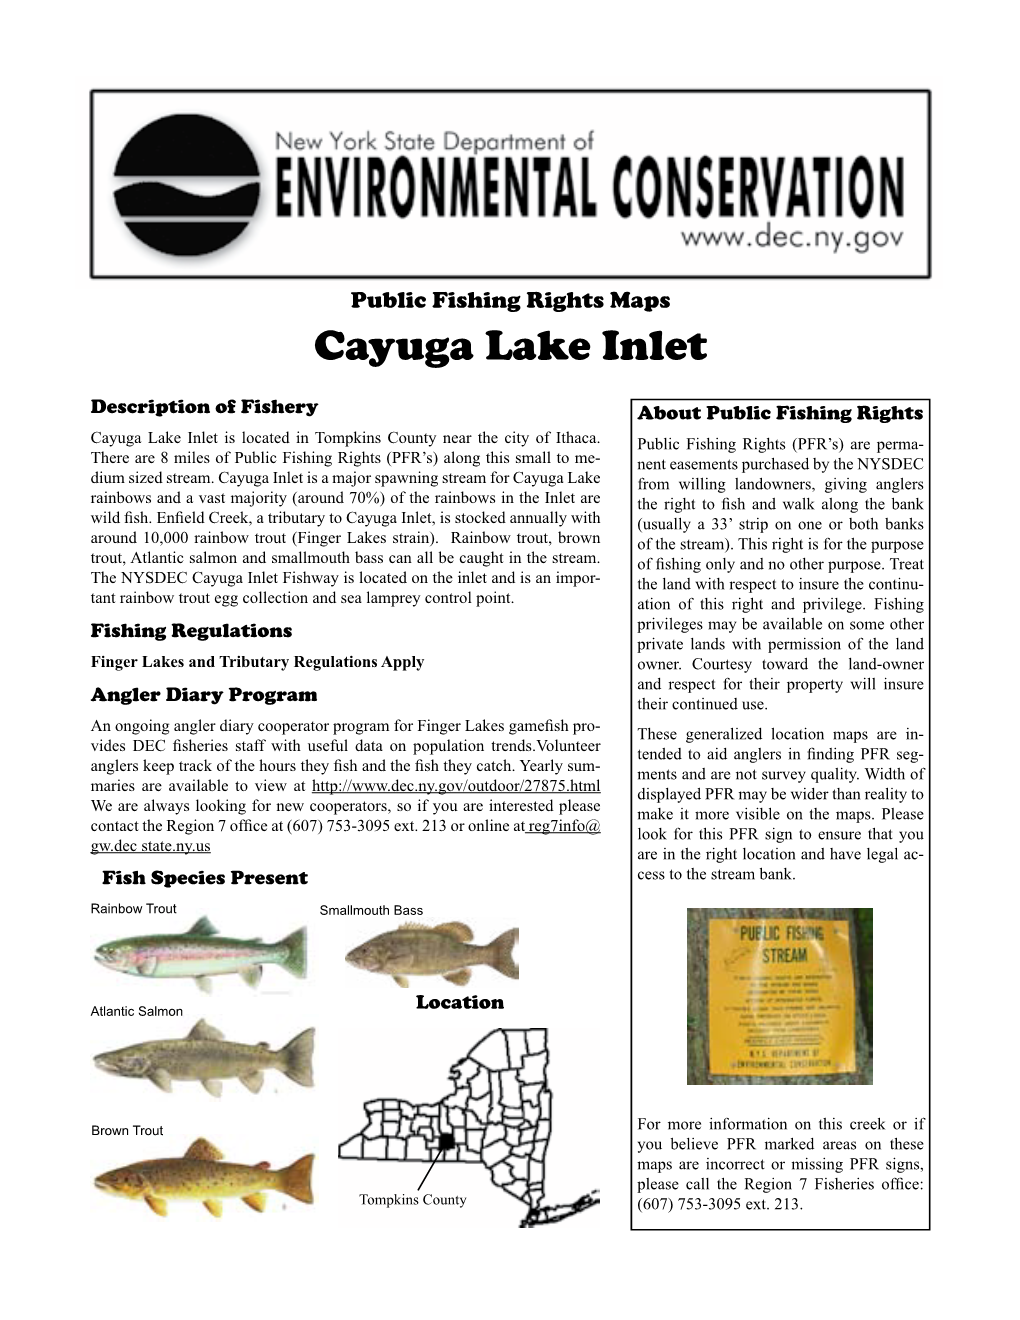 Cayuga Lake Inlet Public Fishing Rights